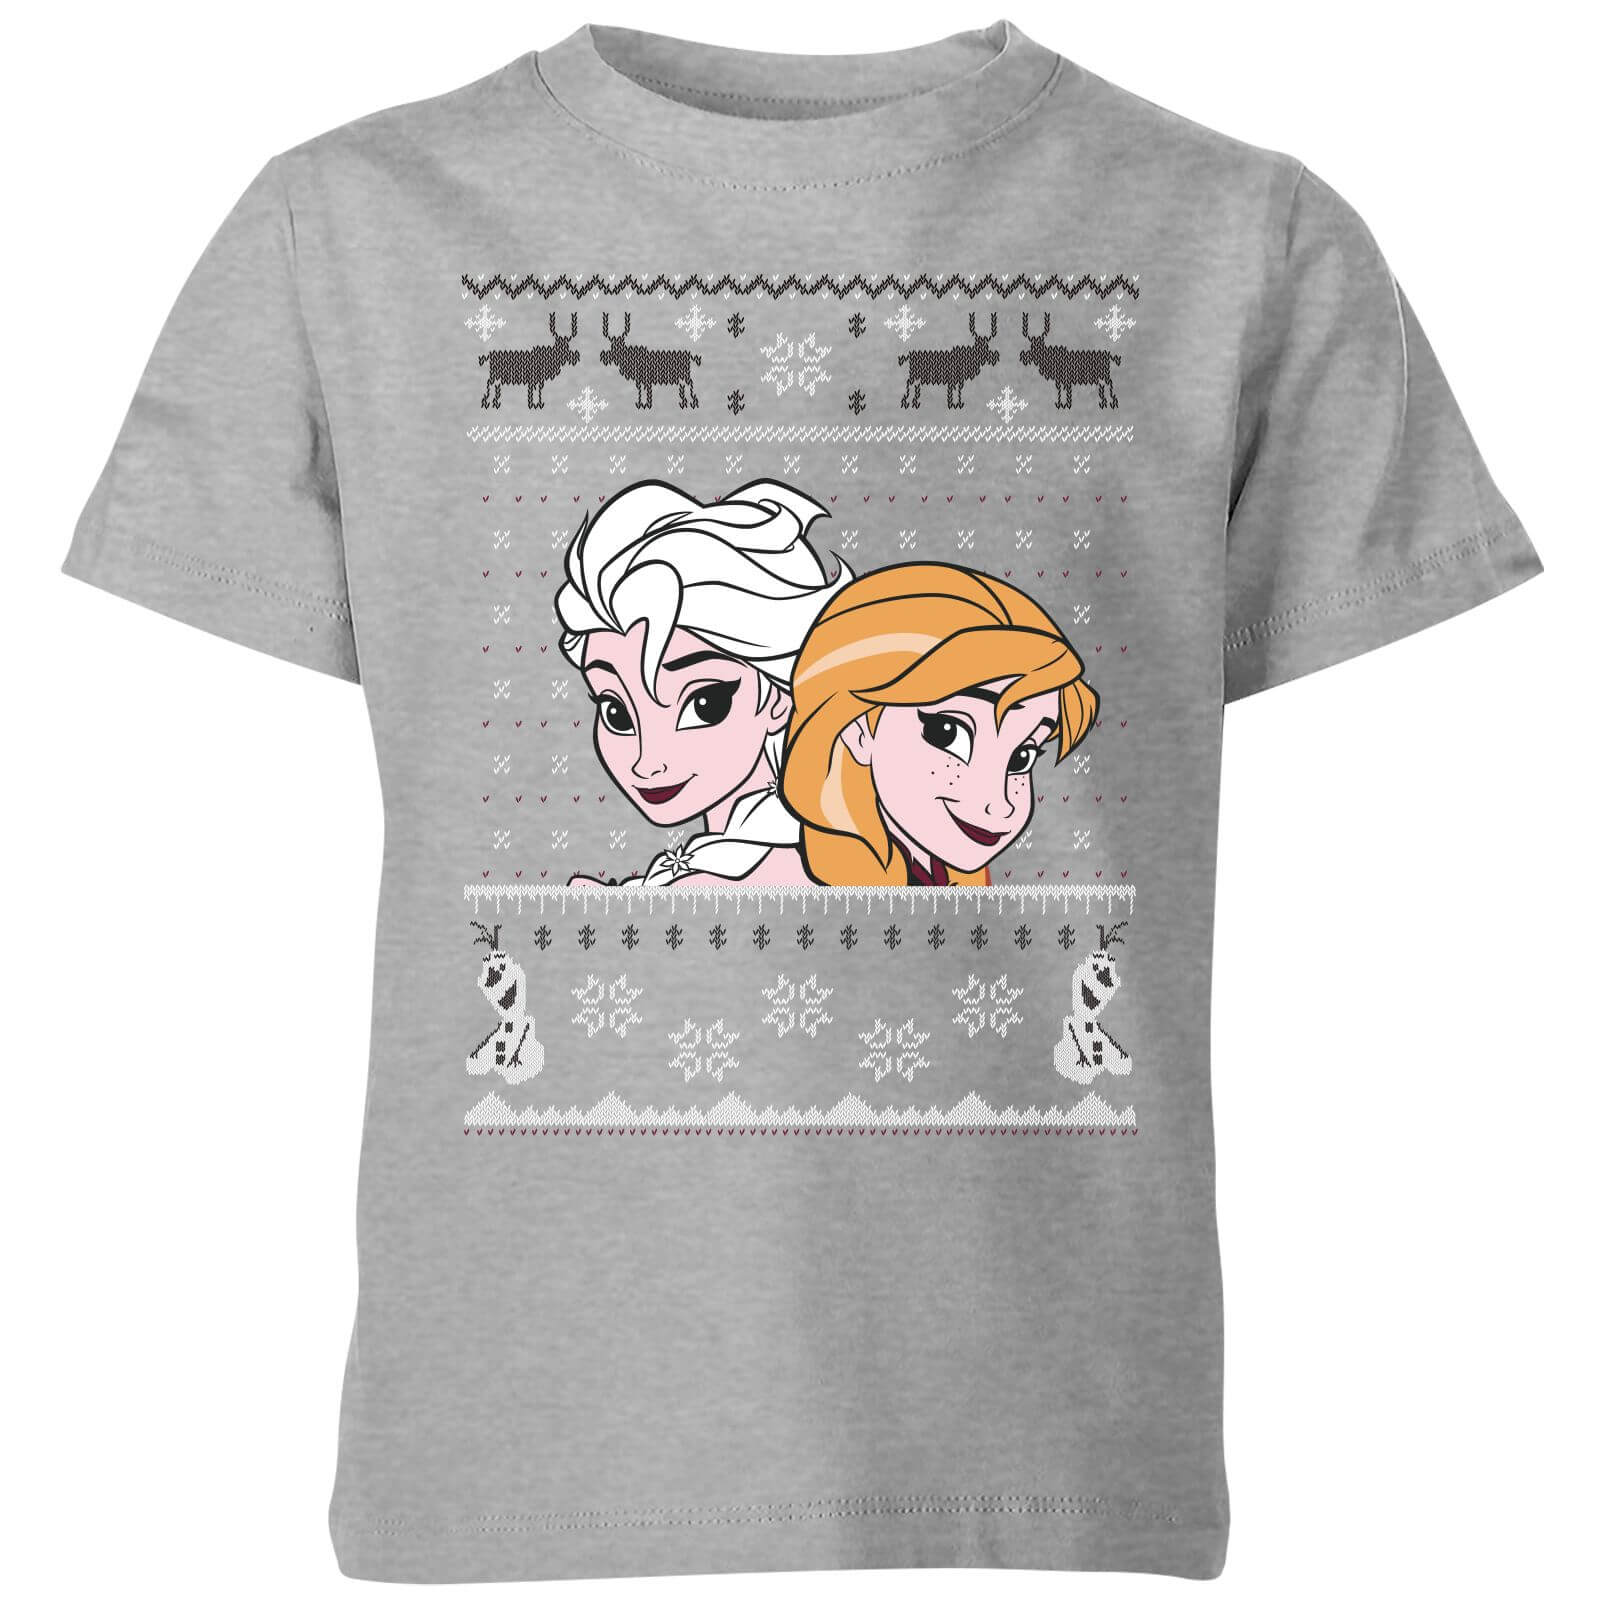 Disney Frozen Elsa and Anna Kids' Christmas T-Shirt - Grey - 11-12 Jahre